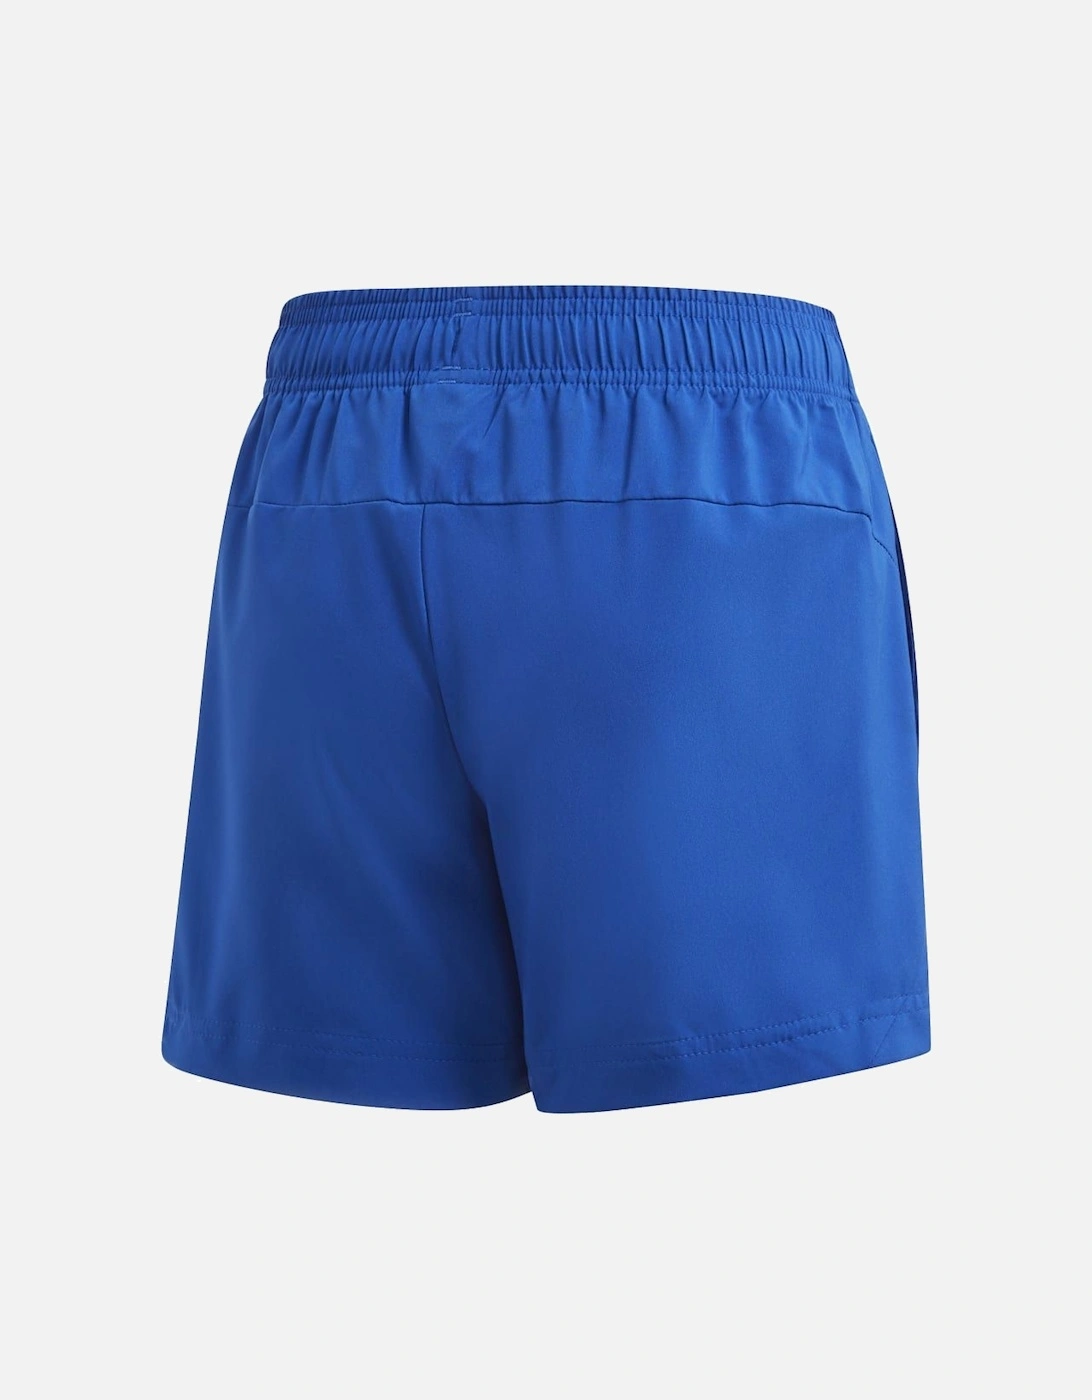 Boys Climaheat Essentials Shorts